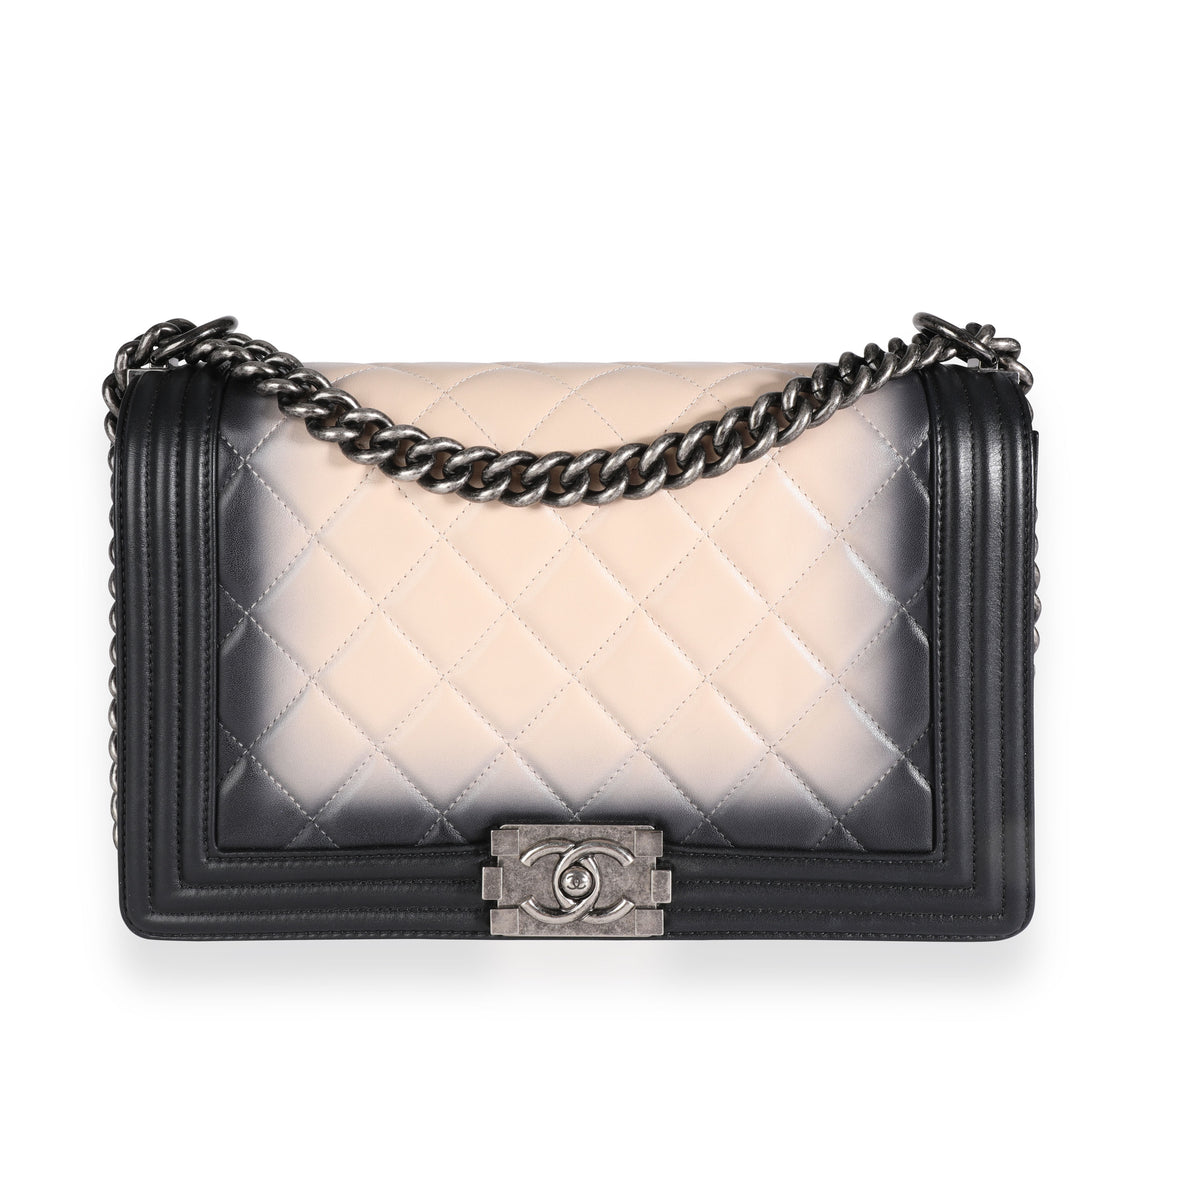 Chanel Black & Beige Ombré Quilted Leather Boy Bag